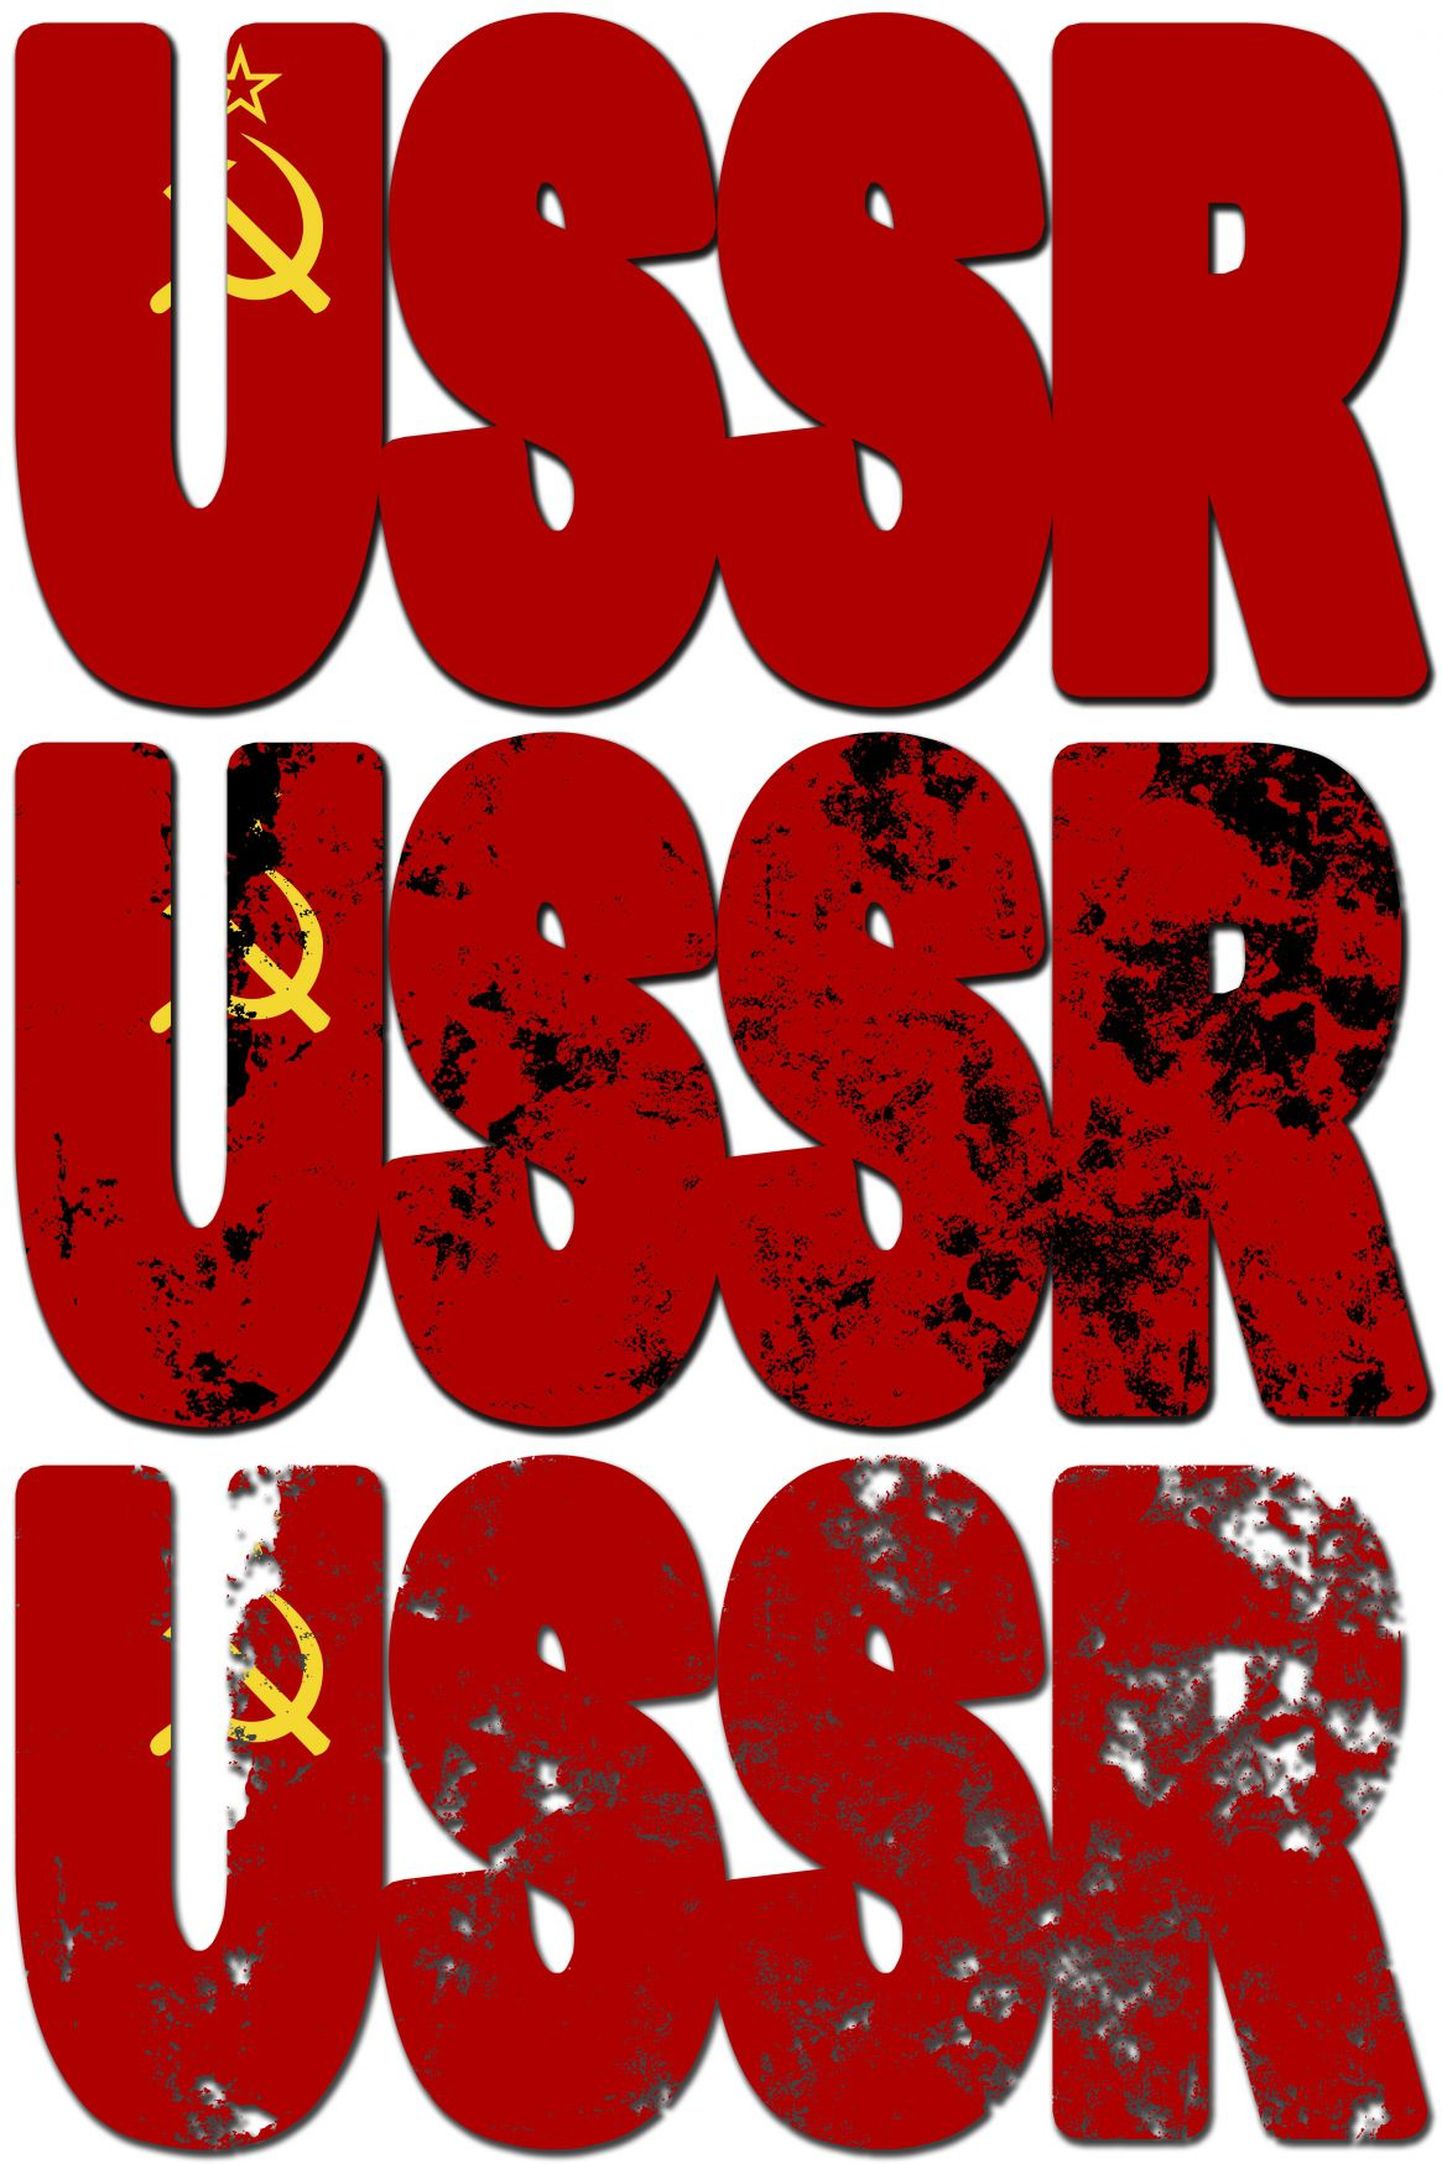 USSR logo.